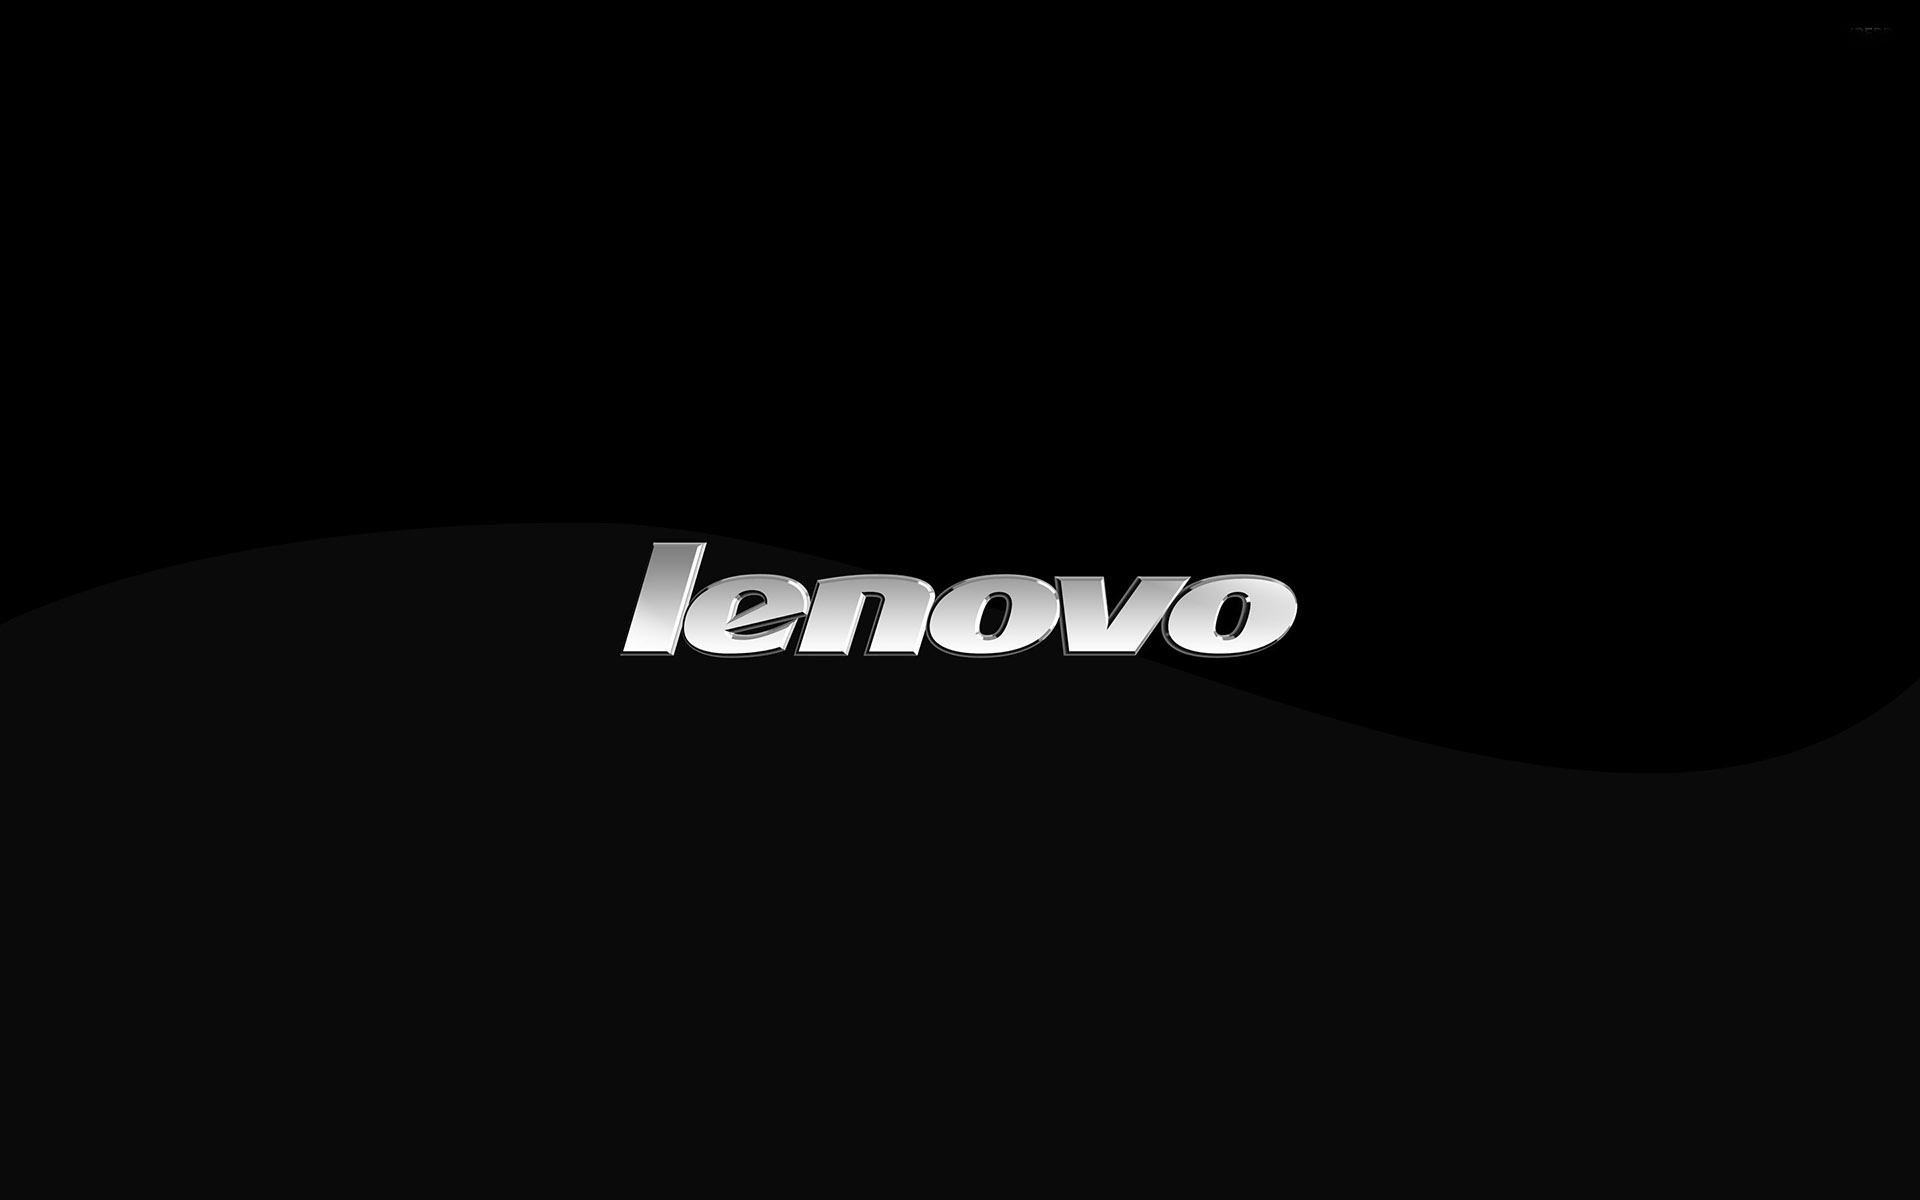 Lenovo Logotype Only Black Background HD Desktop Wallpaper